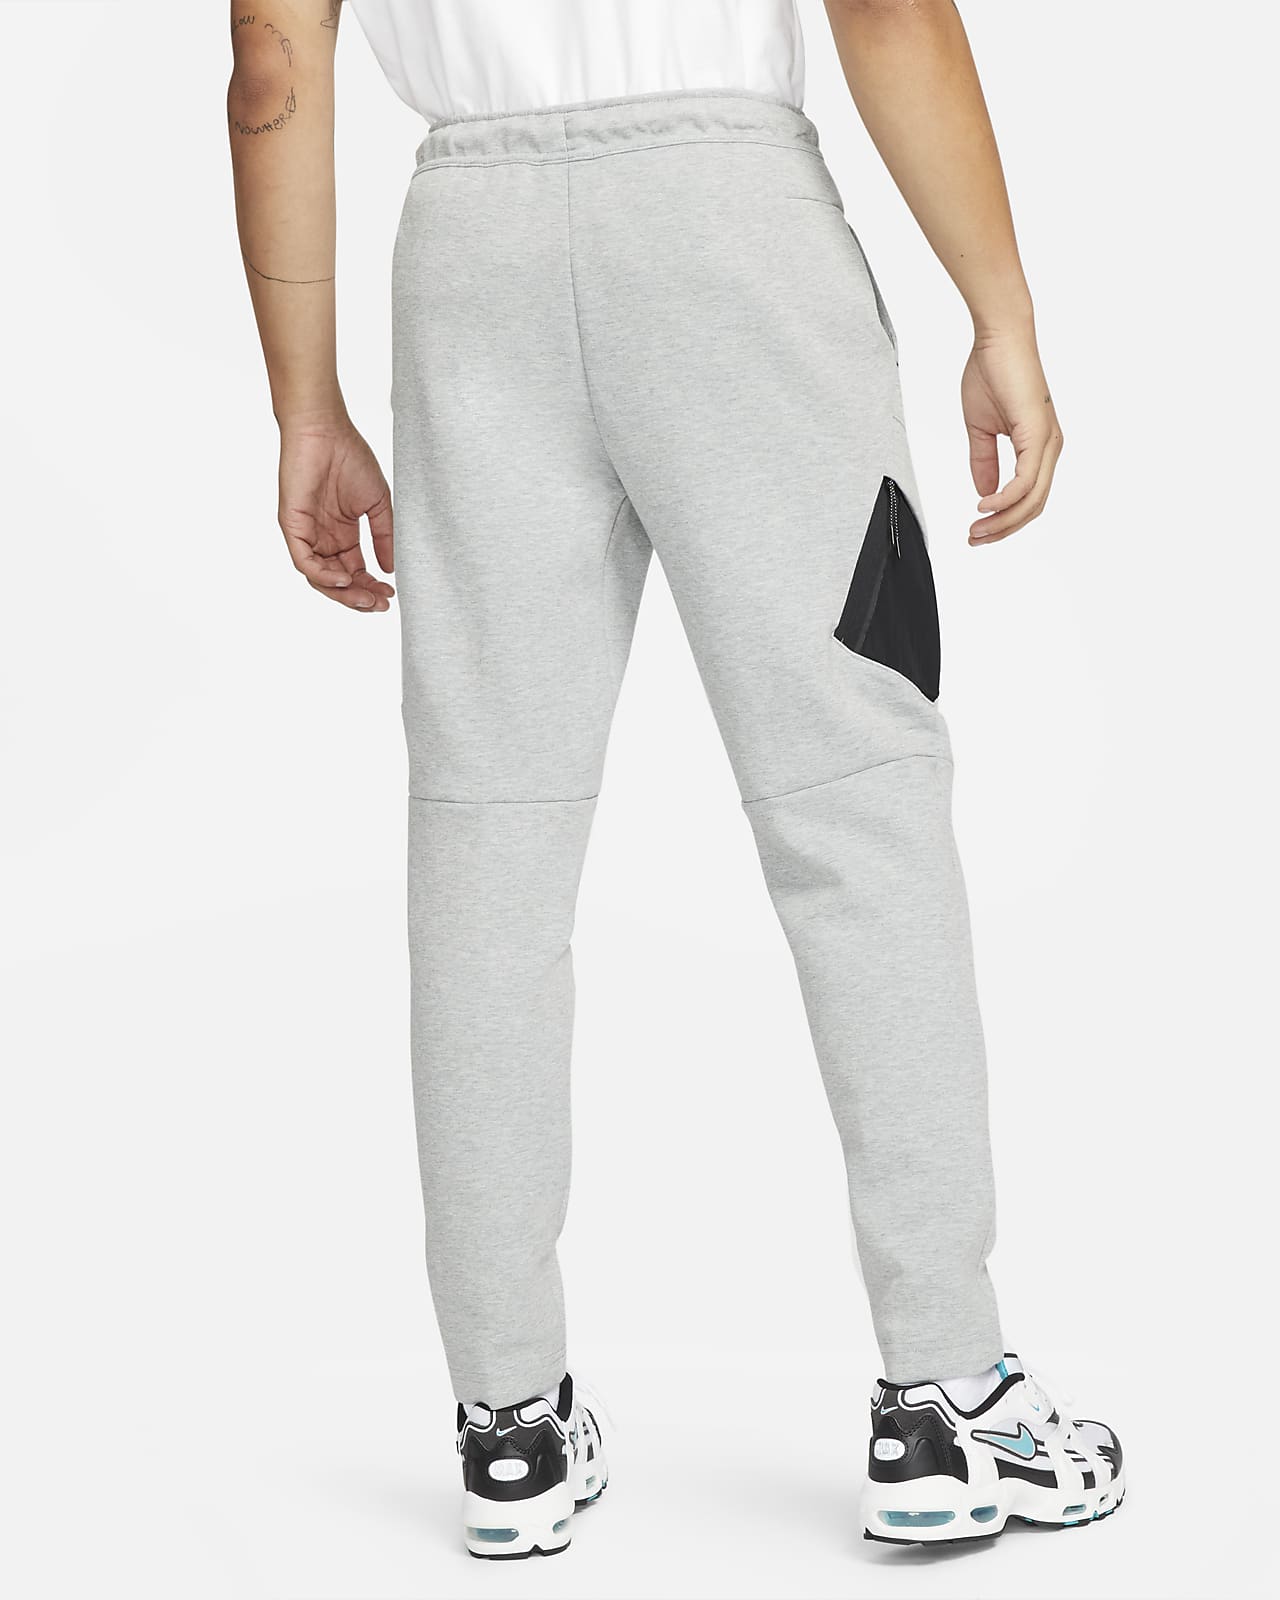 Pantalones cargo para Nike Sportswear Nike.com